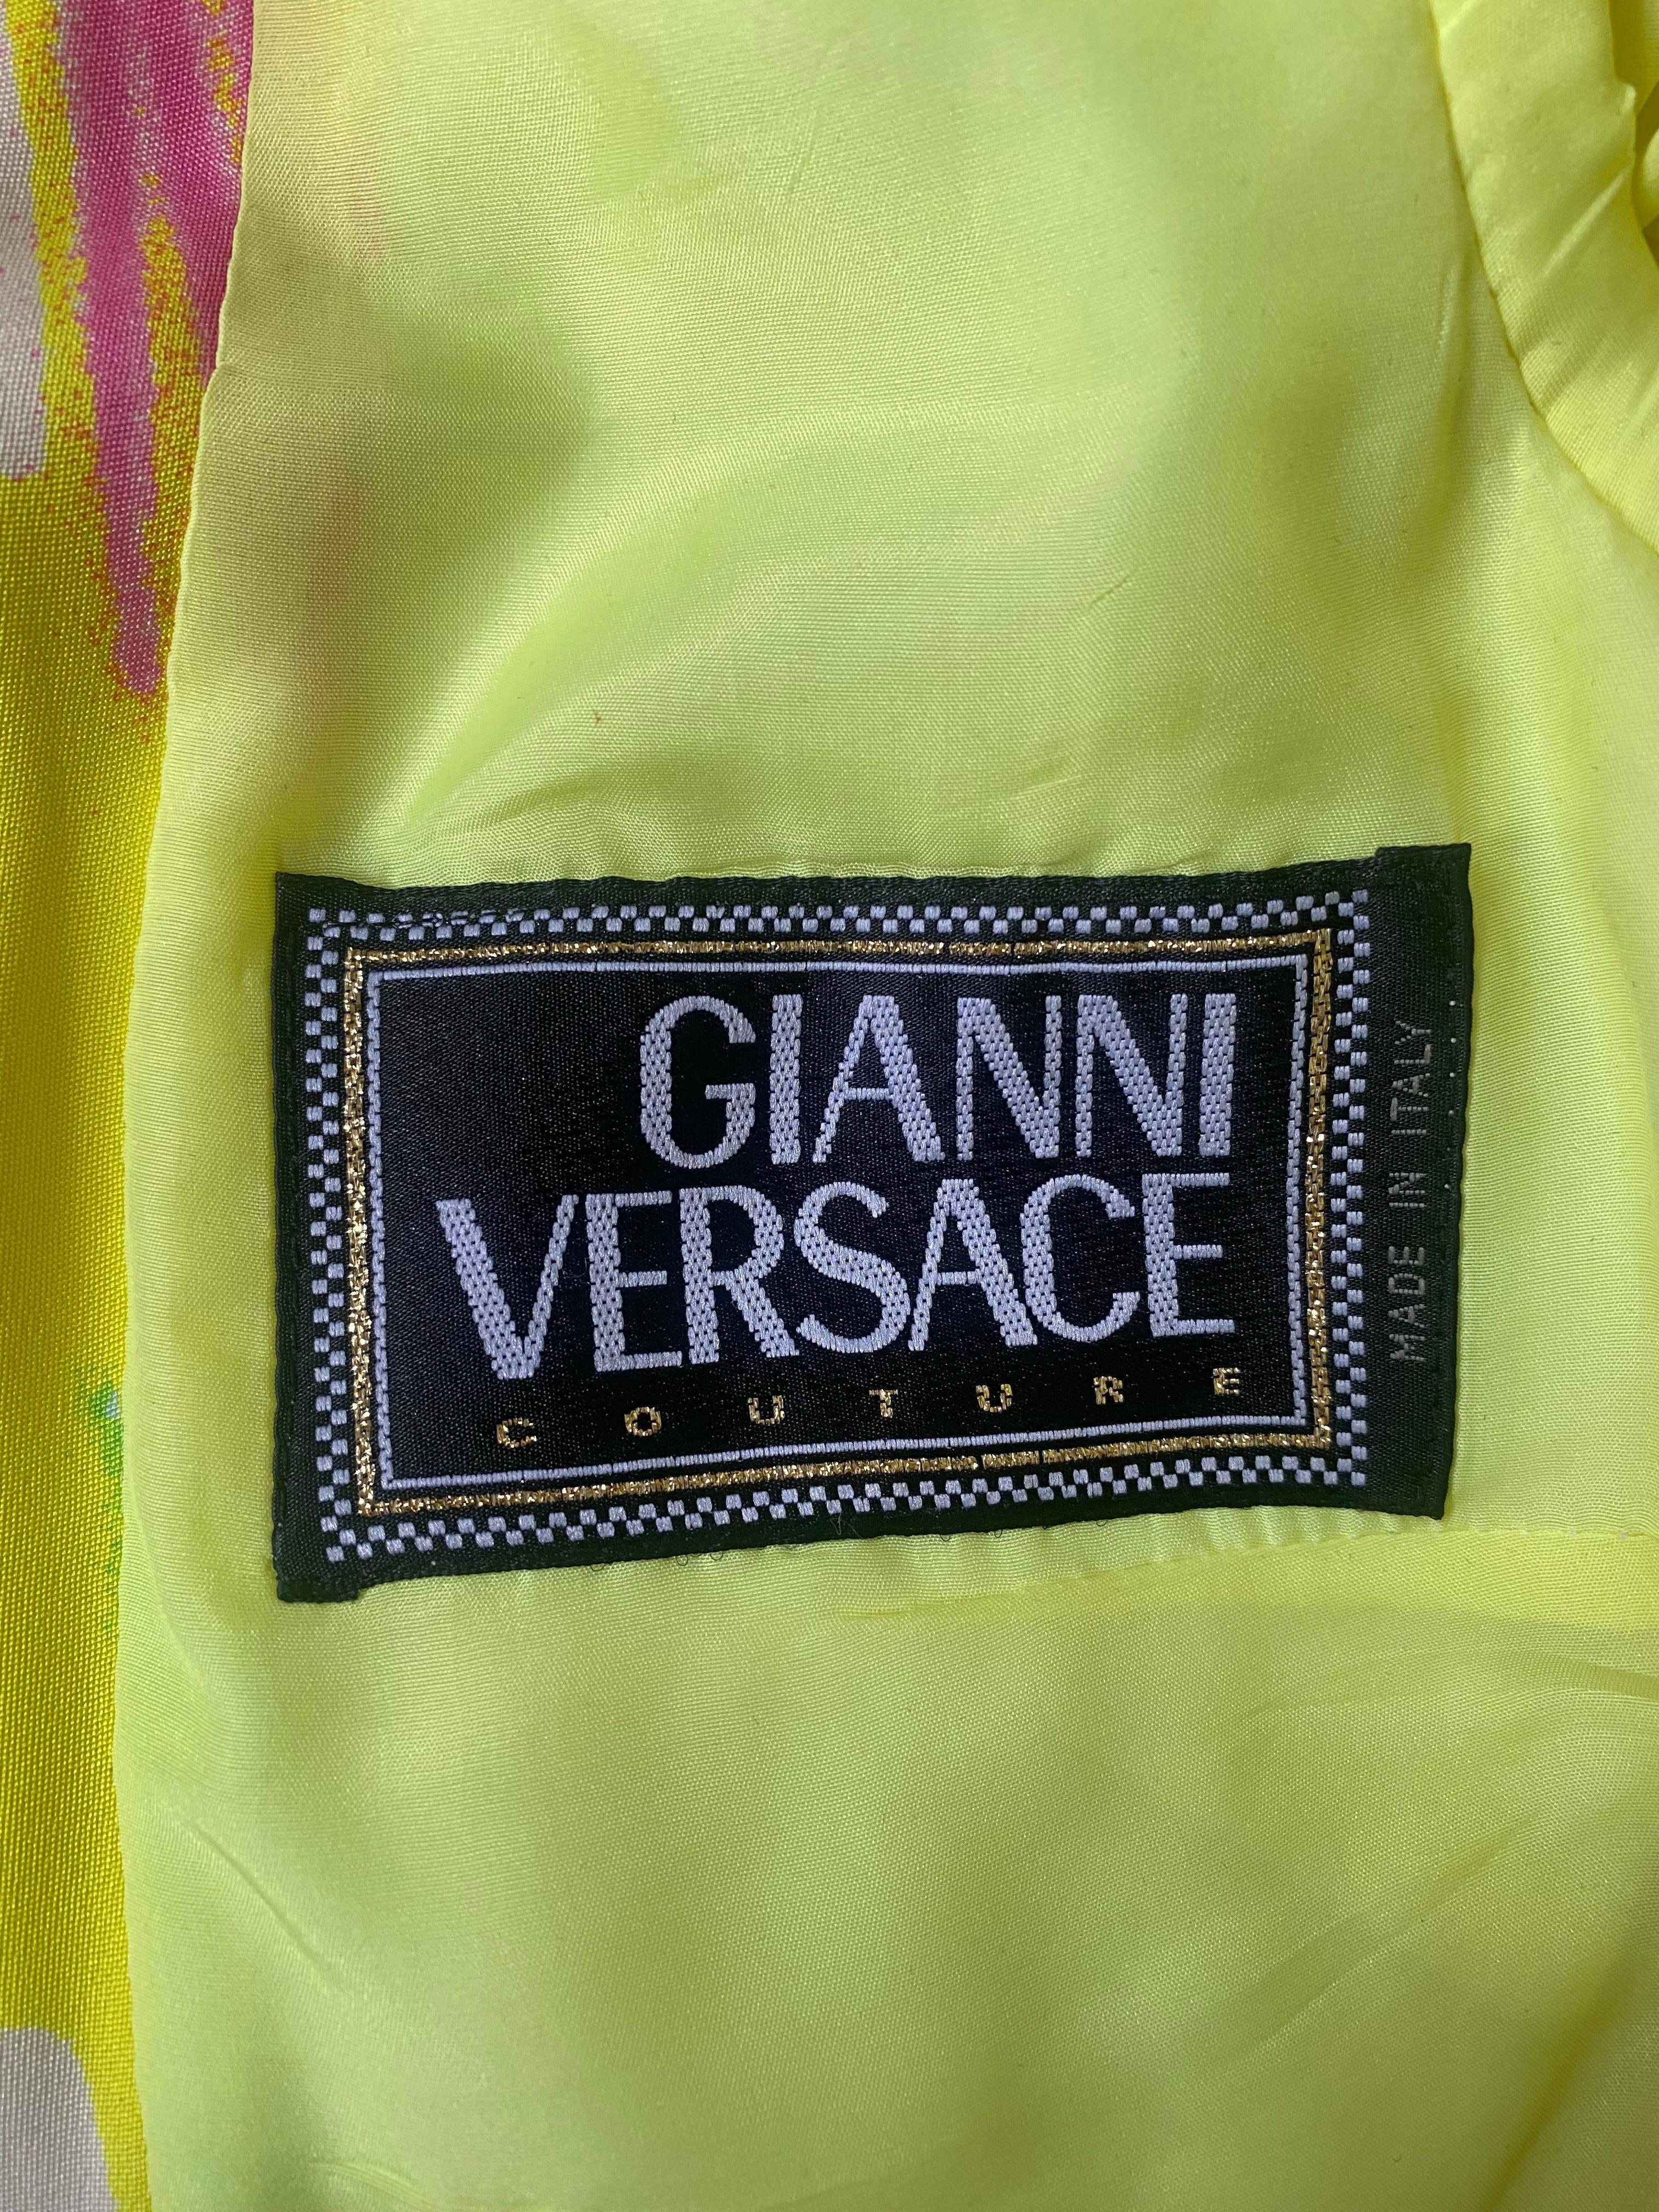 Tailleur robe jaune Gianni Versace 1996 en vente 2